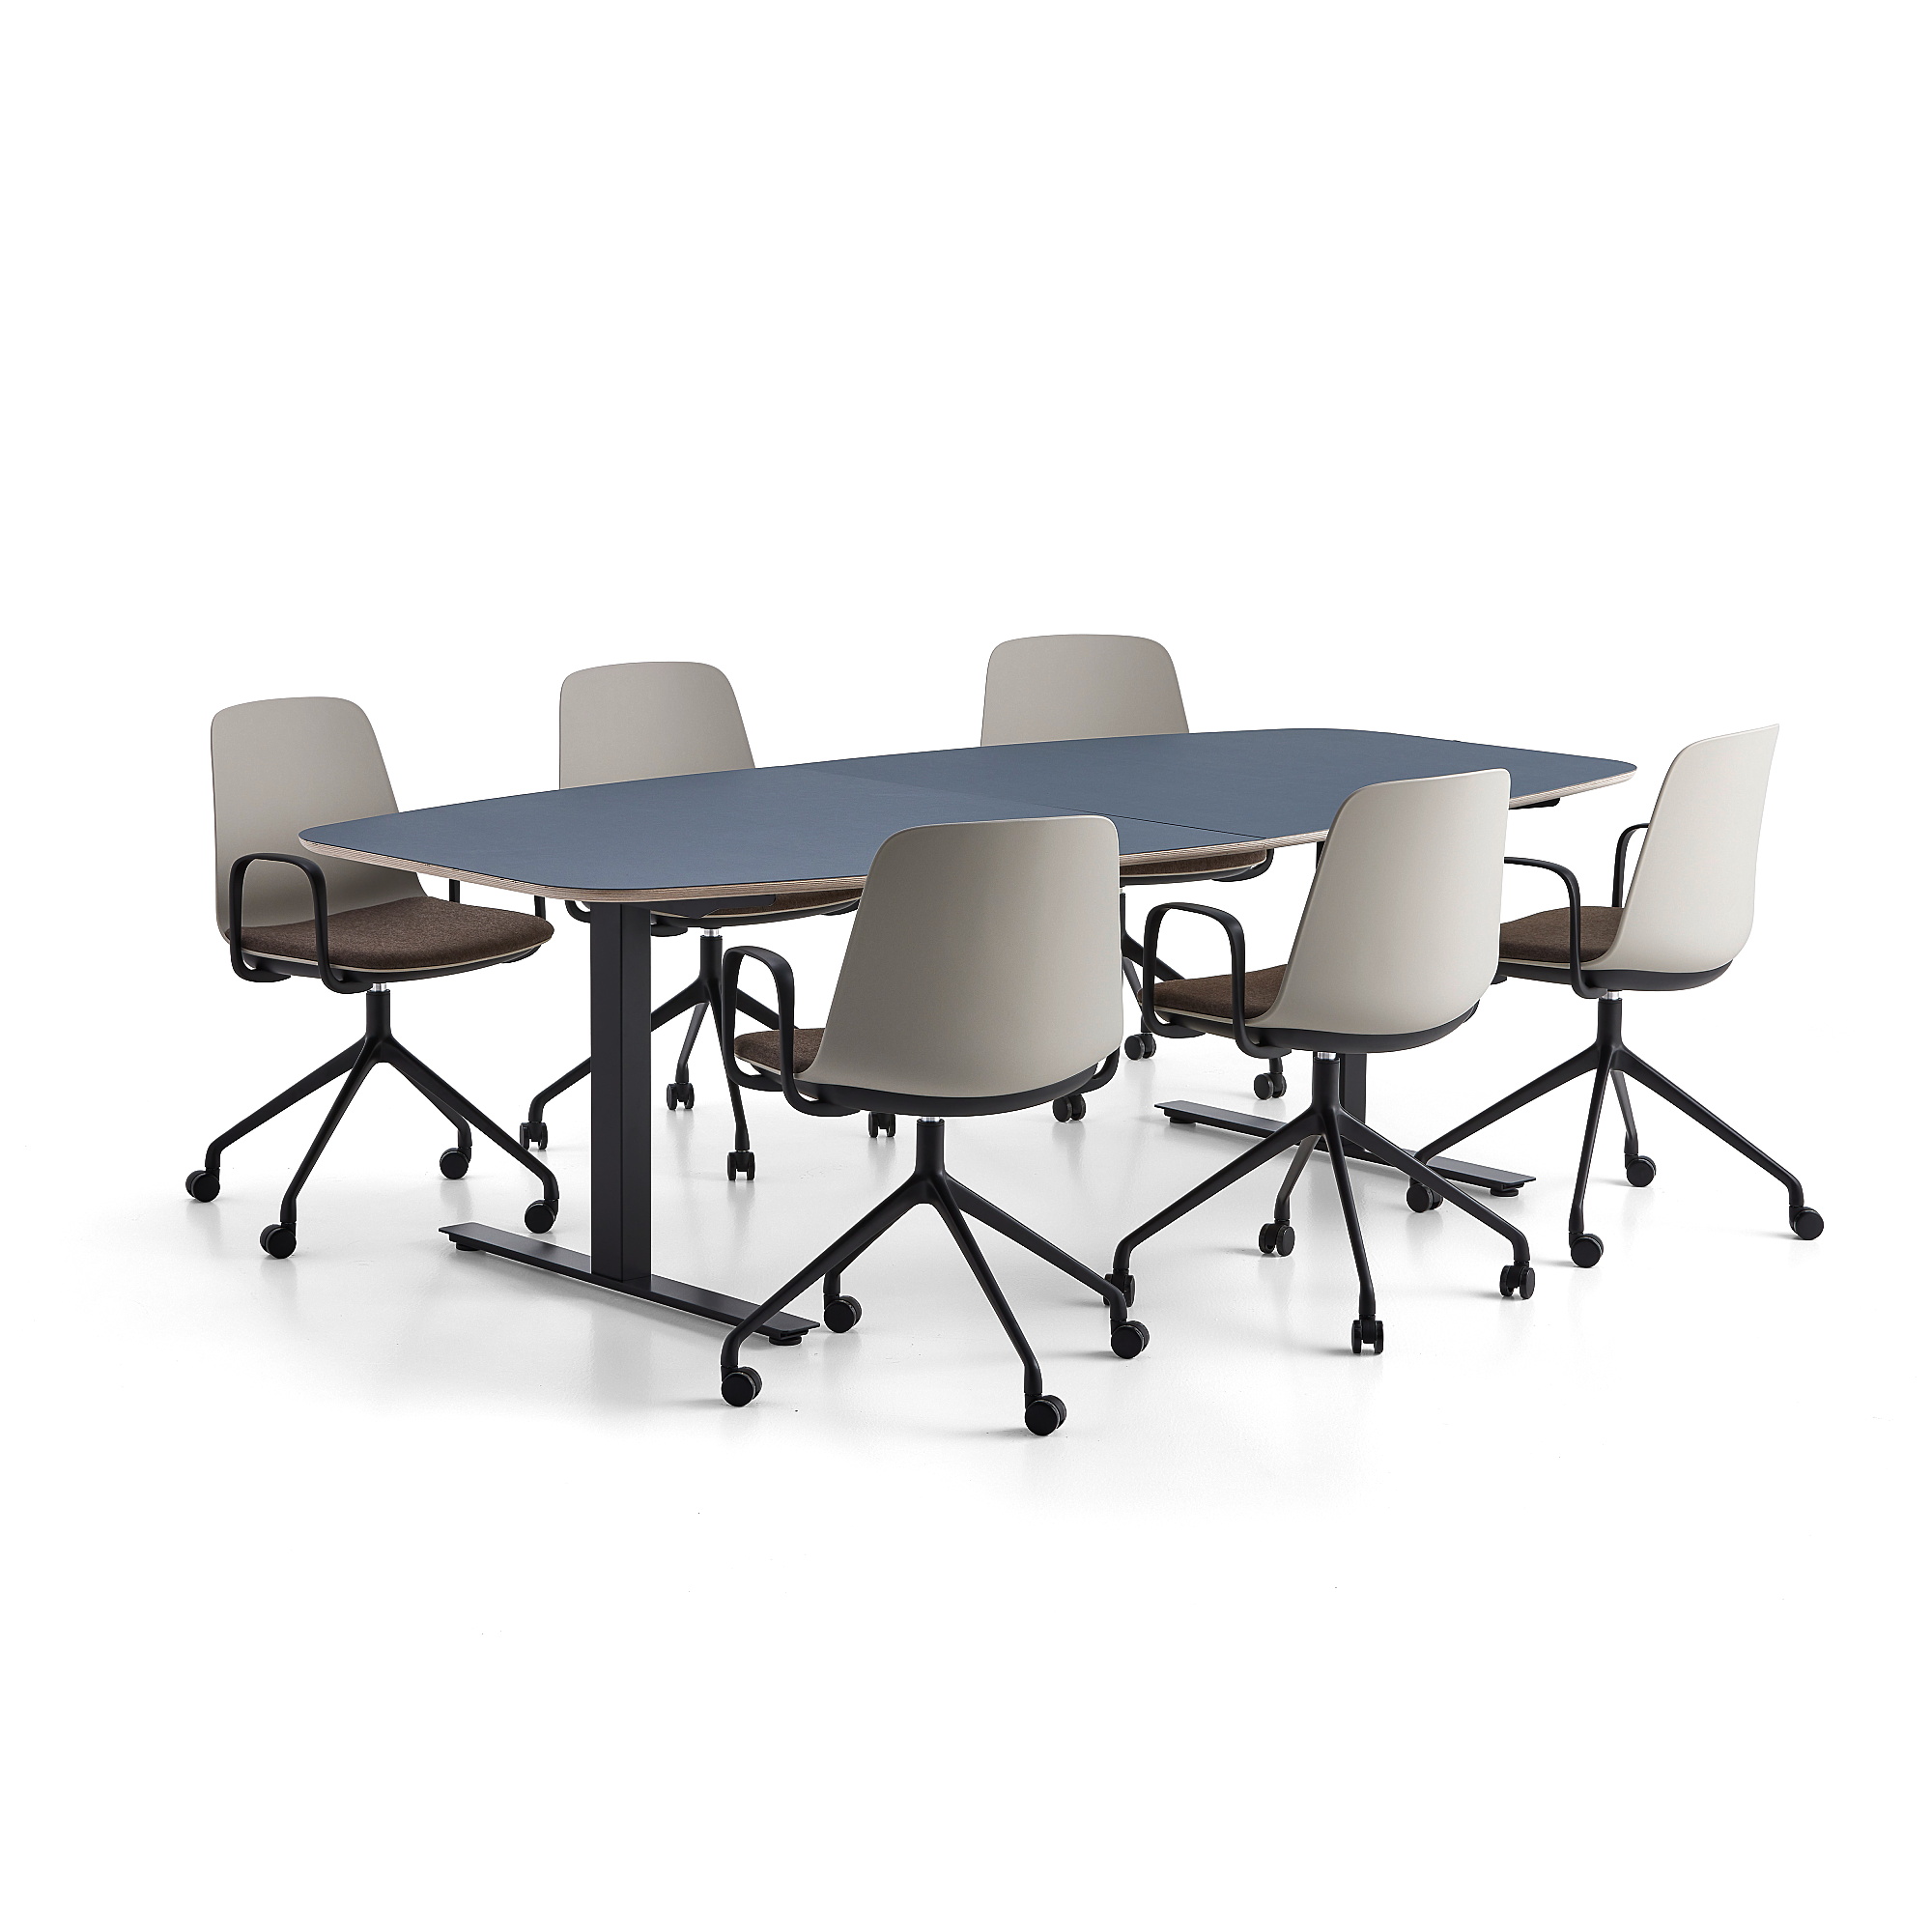 Rokovací nábytok AUDREY + LANGFORD, modrý stôl + 6 stoličiek, hnedé